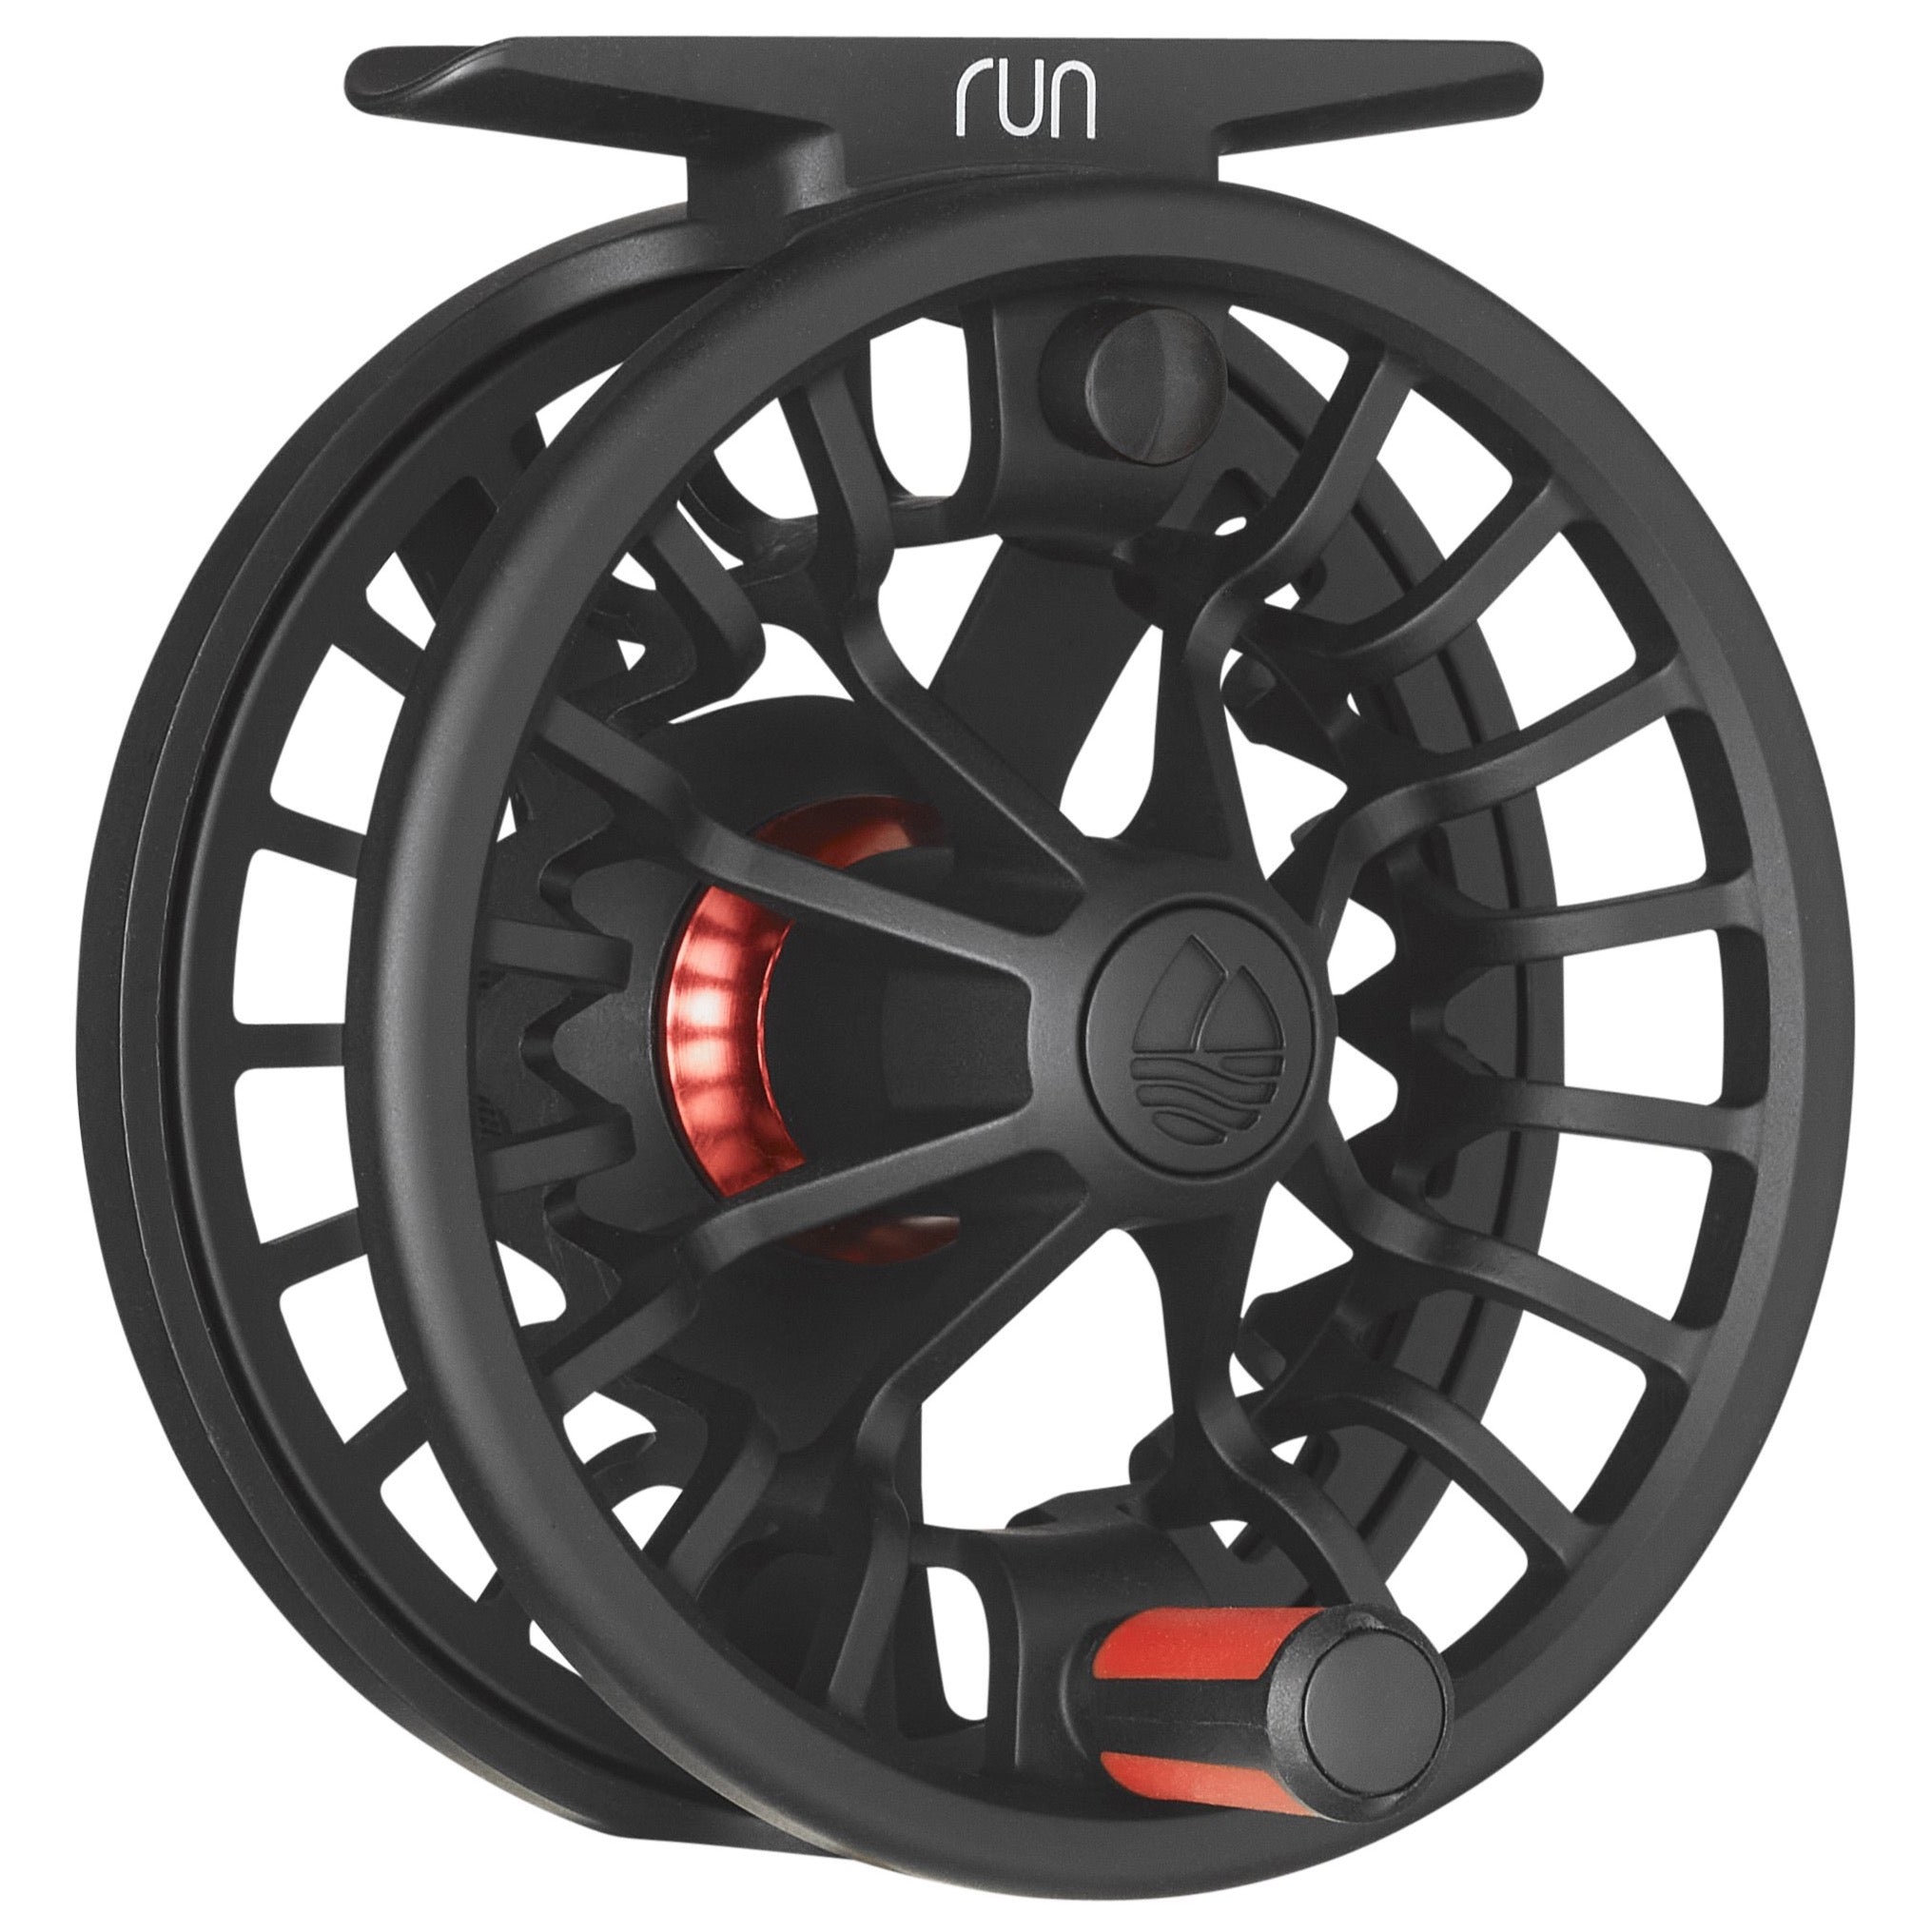 Buy Redington Run Fly Reel 7/8 Black online at